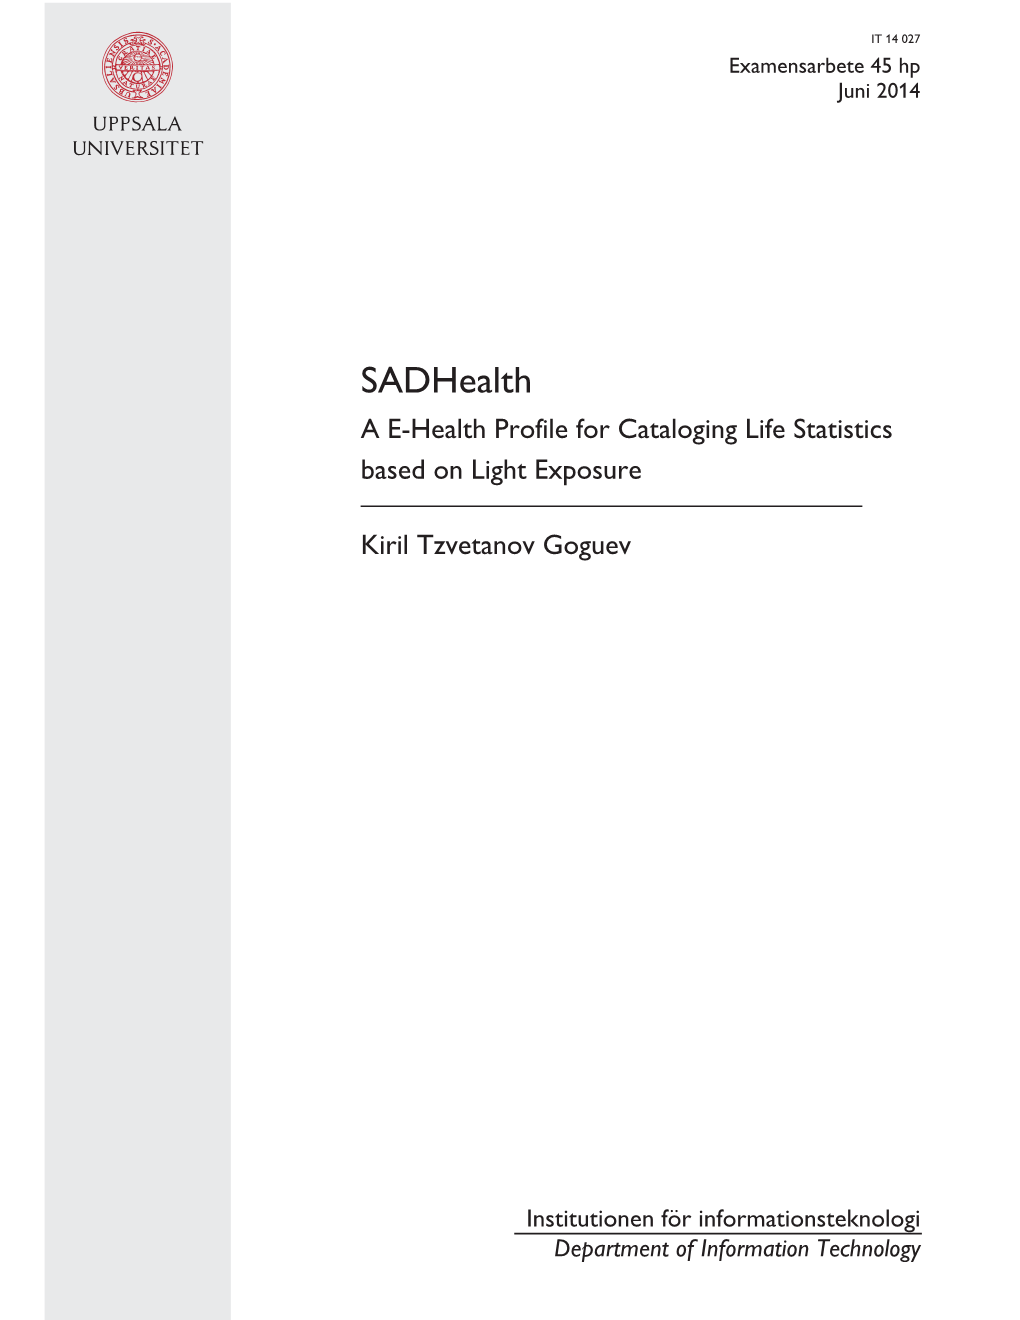 Sadhealth a E-Health Profile for Cataloging Life Statistics Based on Light Exposure